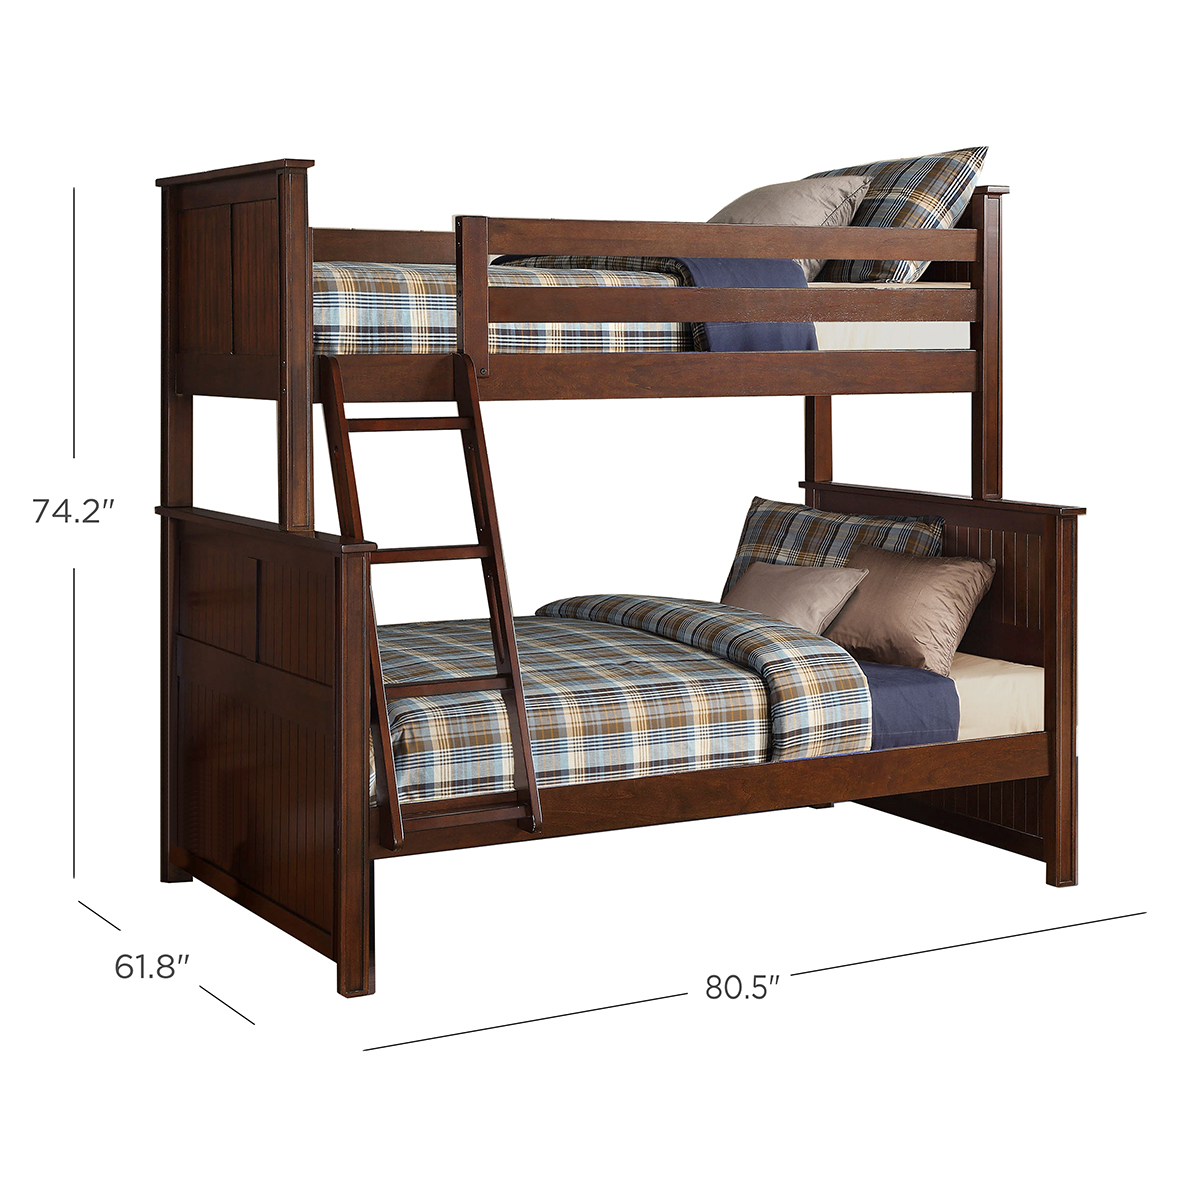 bayside furnishings twin over full bunk bed